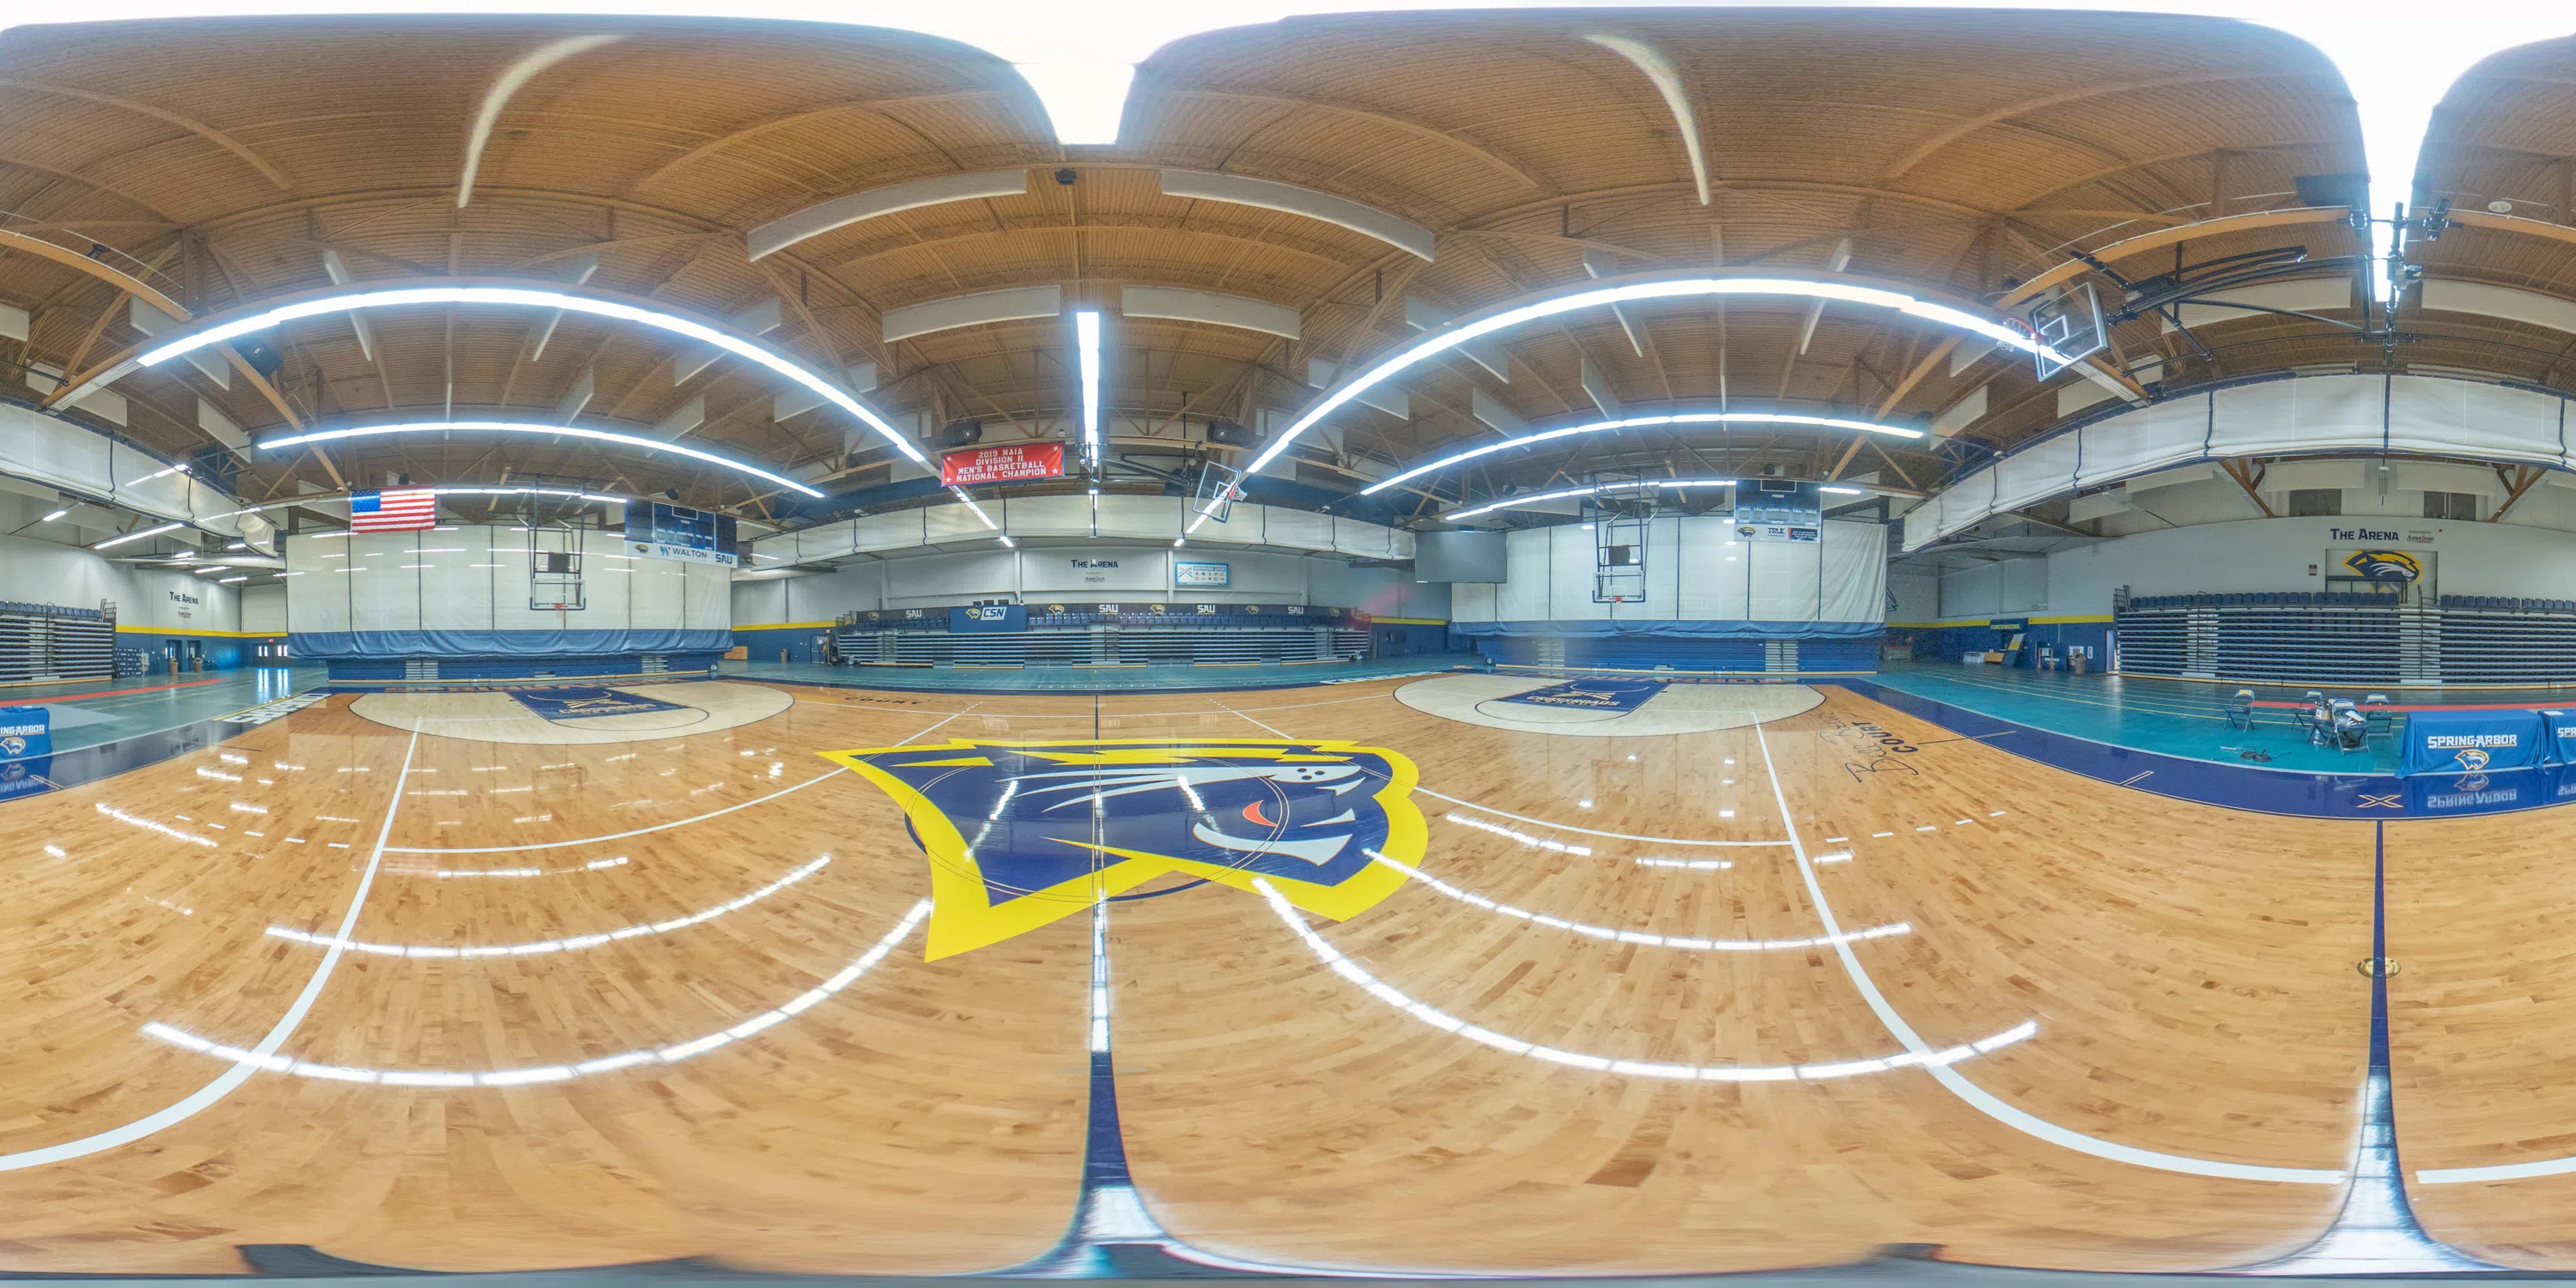 Panorama of basketball court